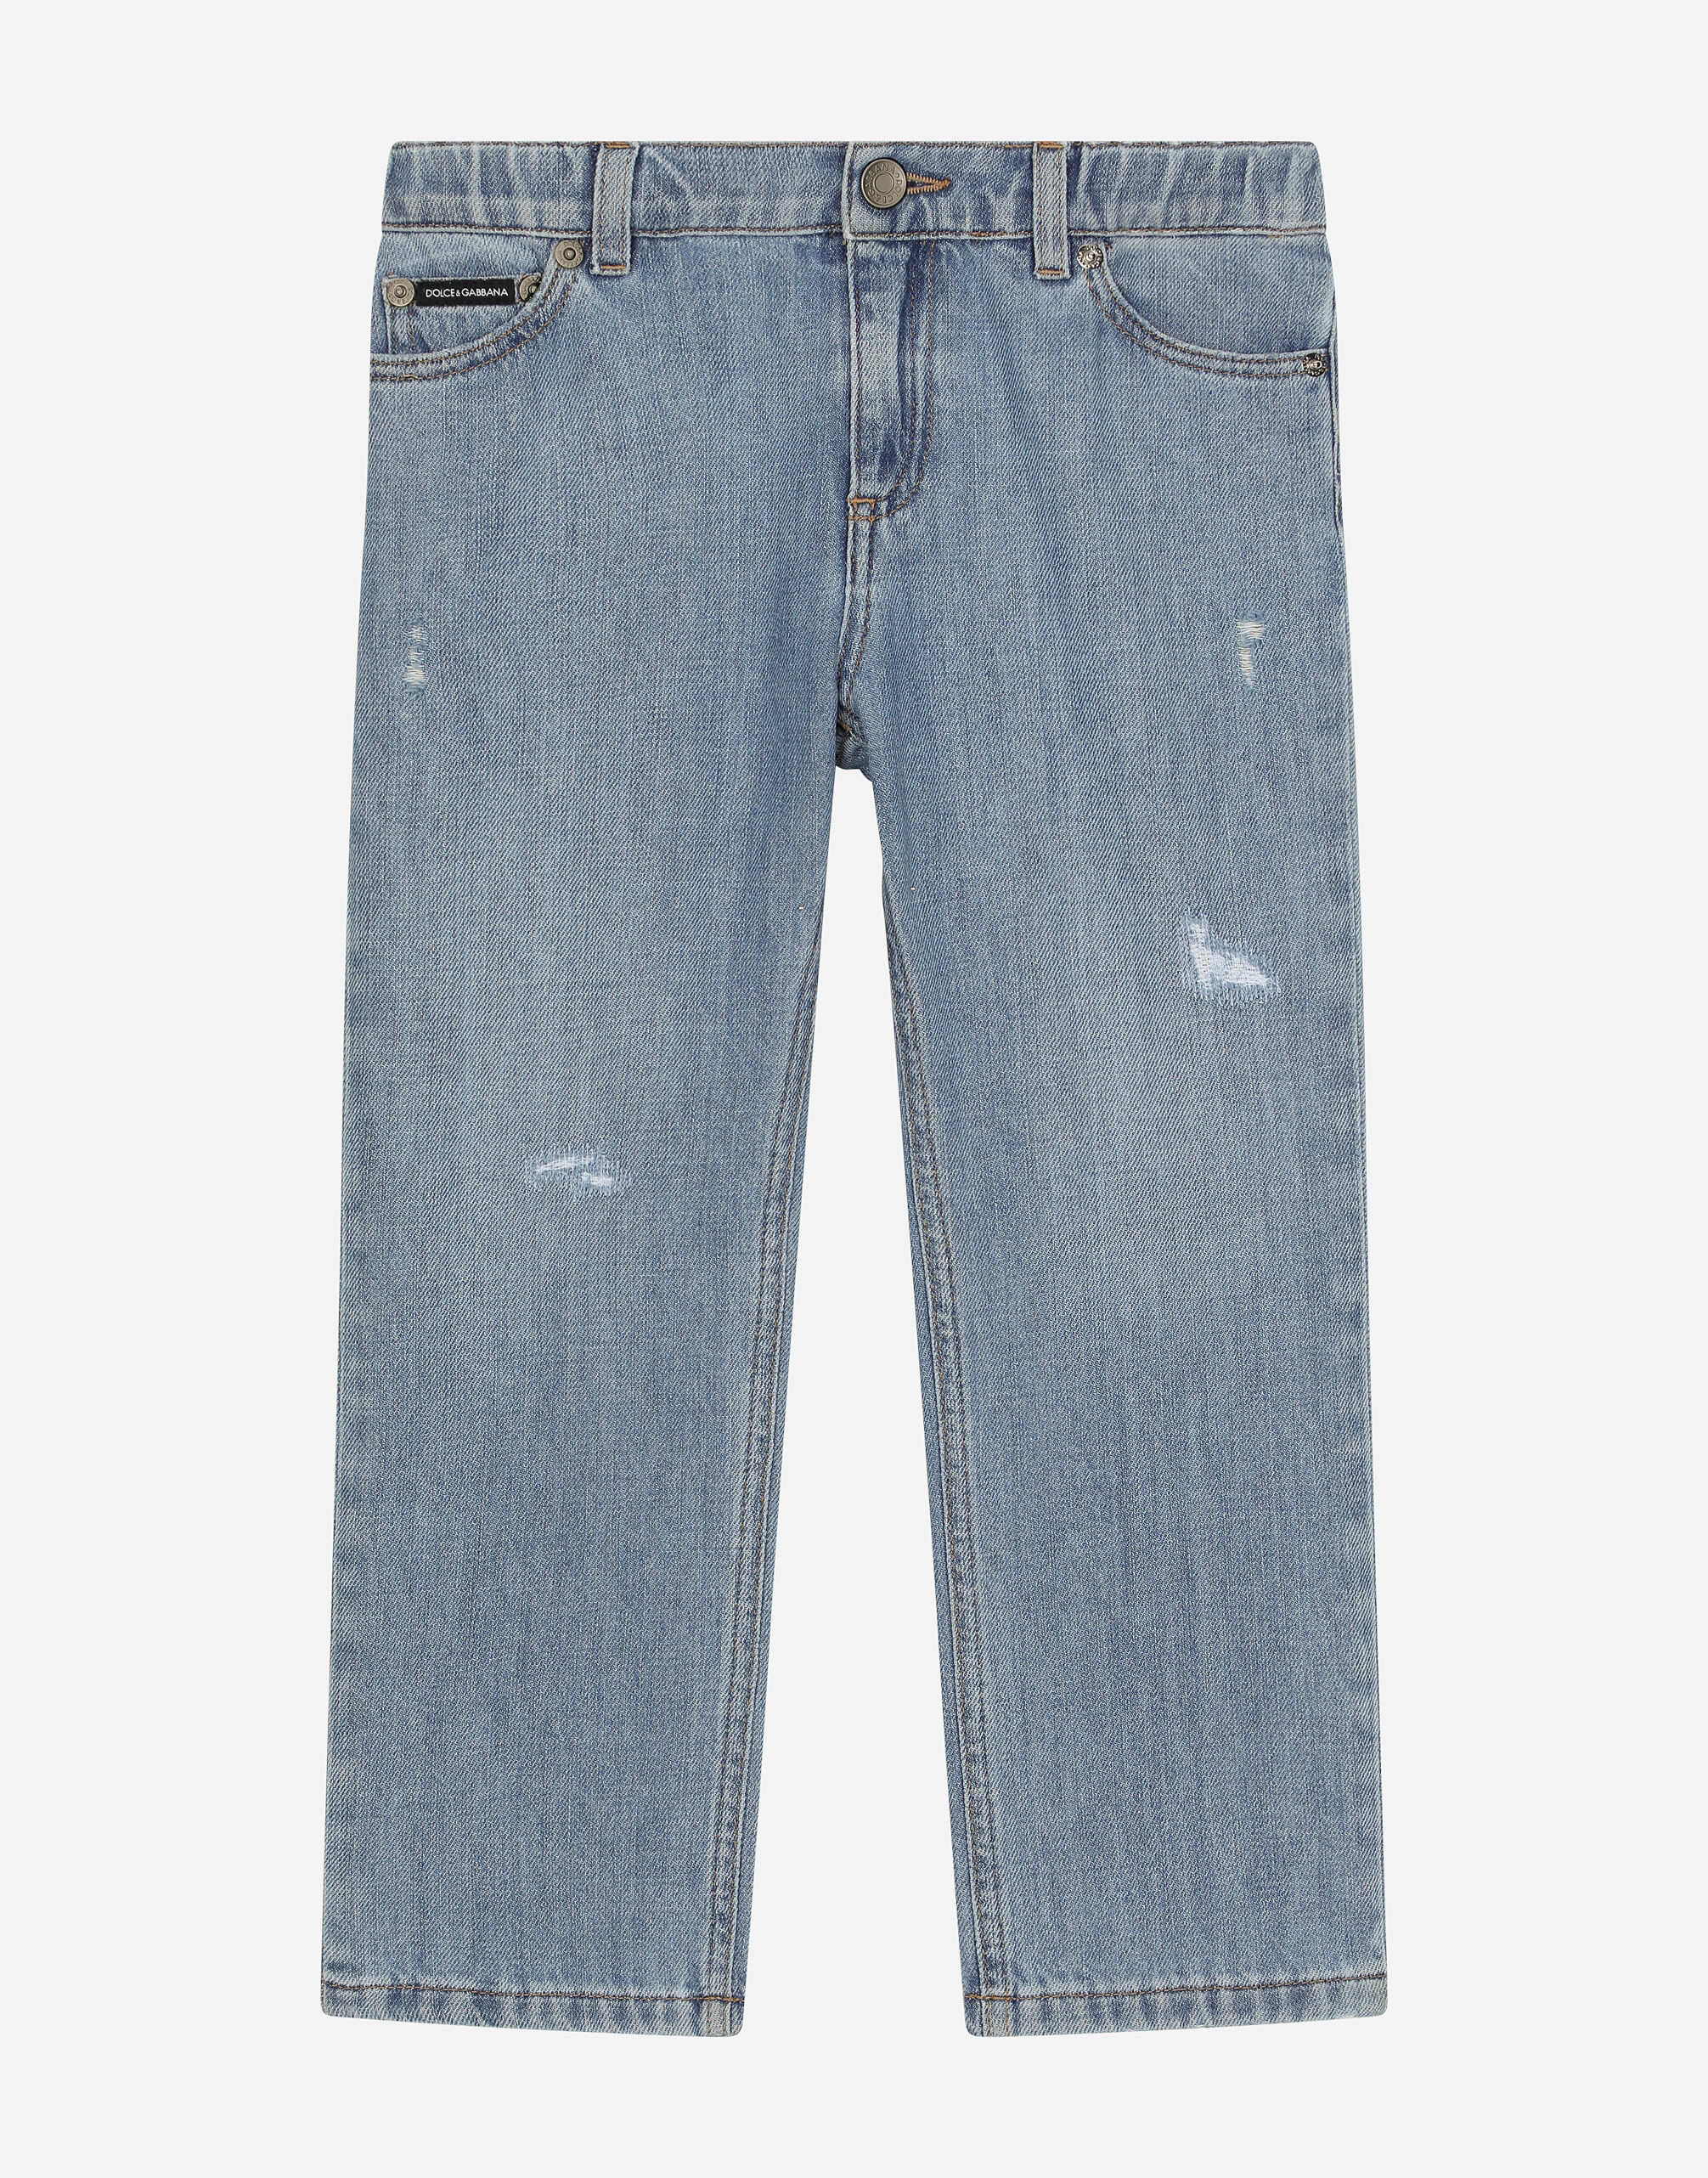 Dolce & Gabbana 5-pocket denim jeans with branded tag Print L4JQT4II7EF